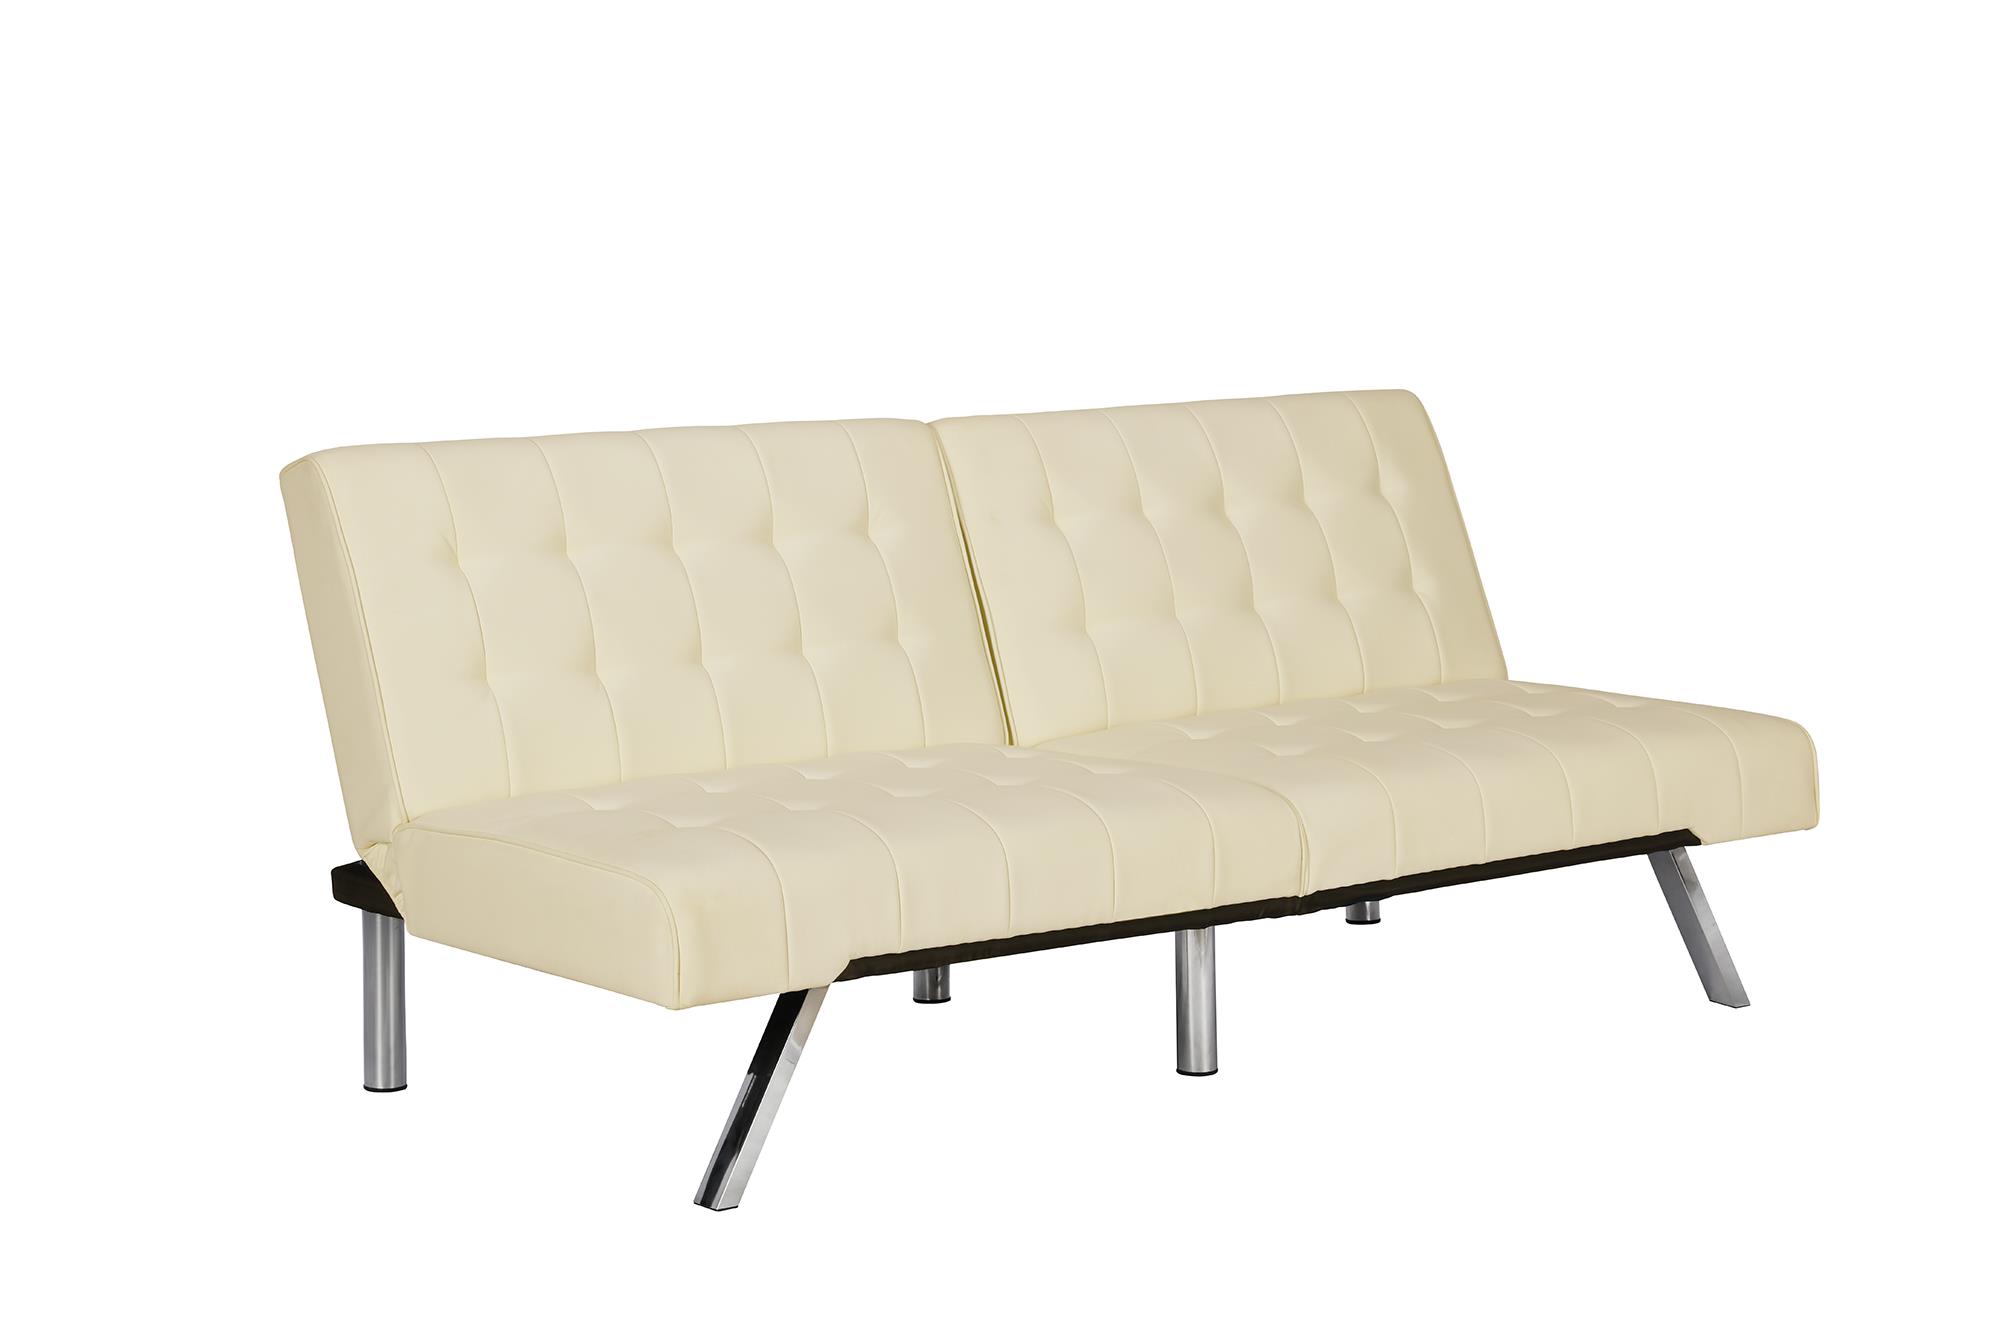 DHP Emily Convertible Tufted Futon Sofa, Vanilla Faux Leather - image 4 of 21